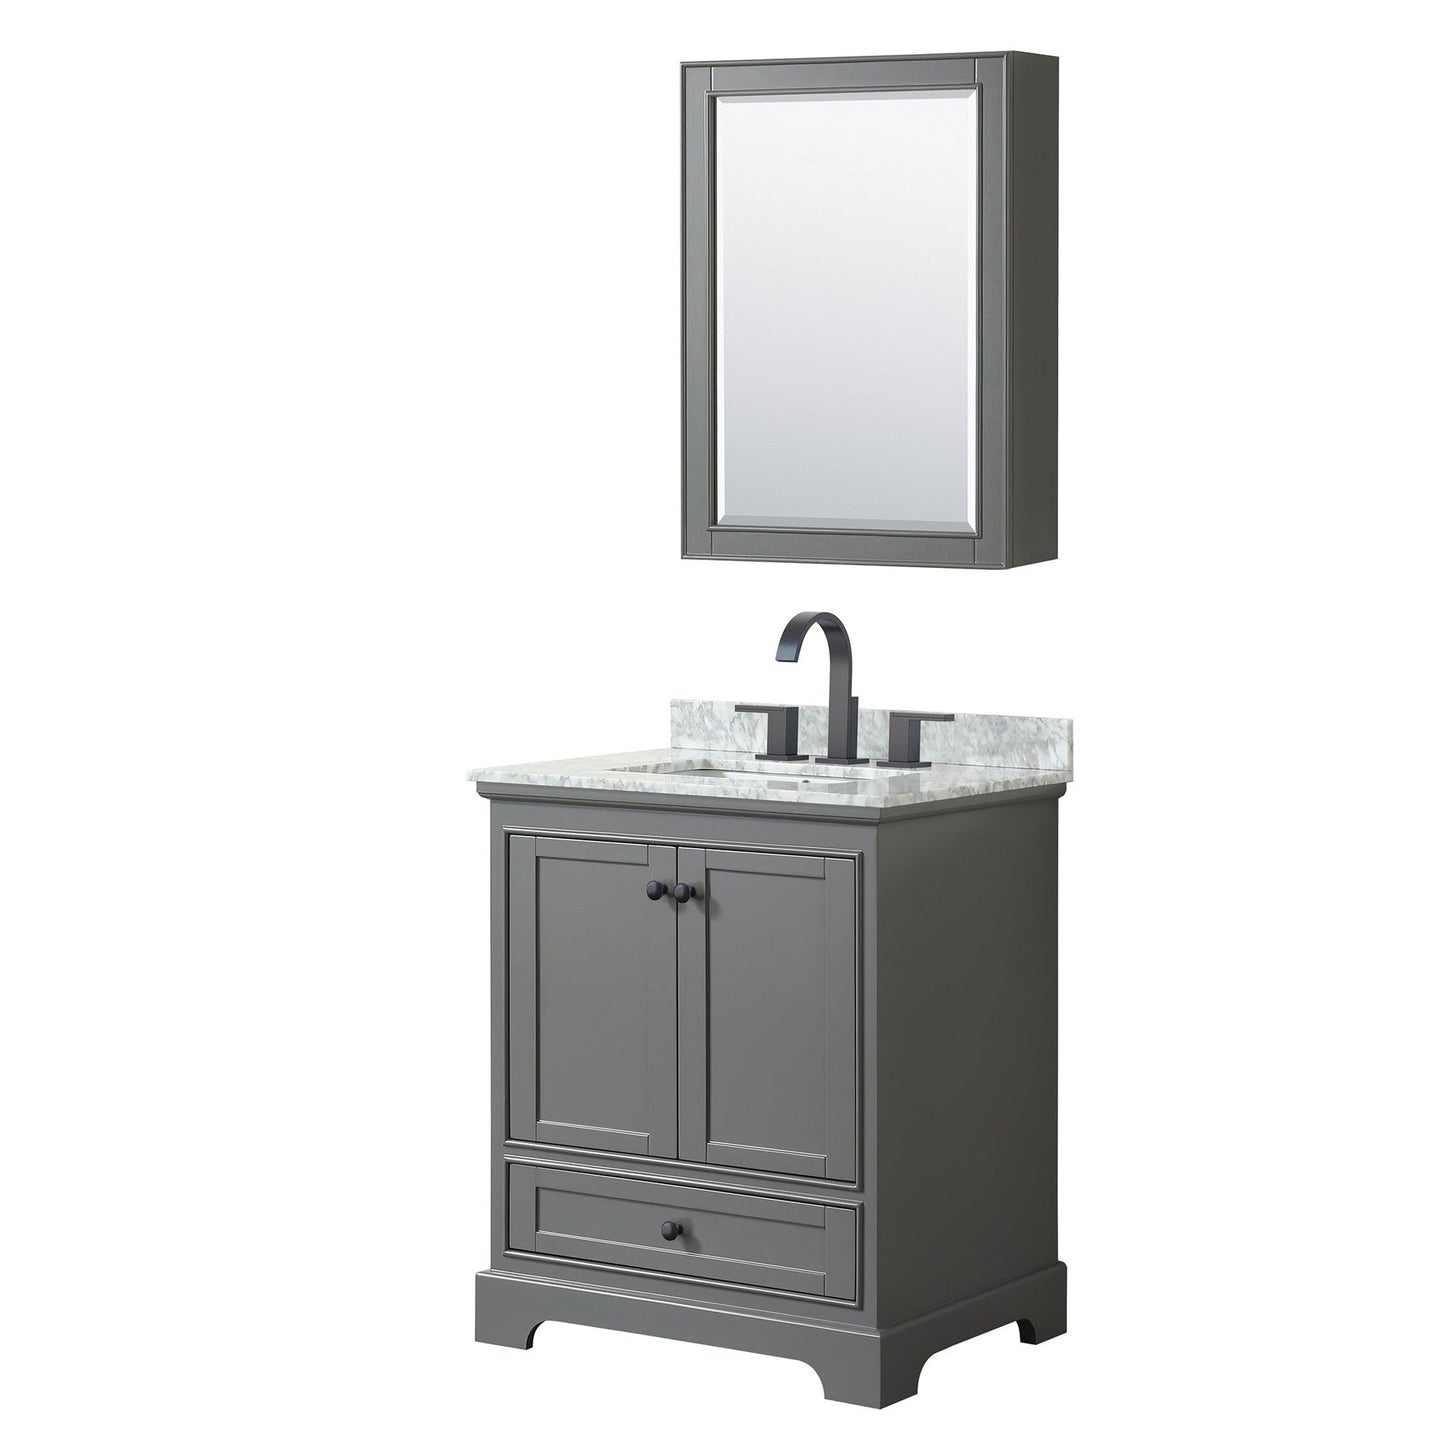 Deborah 30" Single Bathroom Vanity in Dark Gray, White Carrara Marble Countertop, Undermount Square Sink, Matte Black Trim, Medicine Cabinet